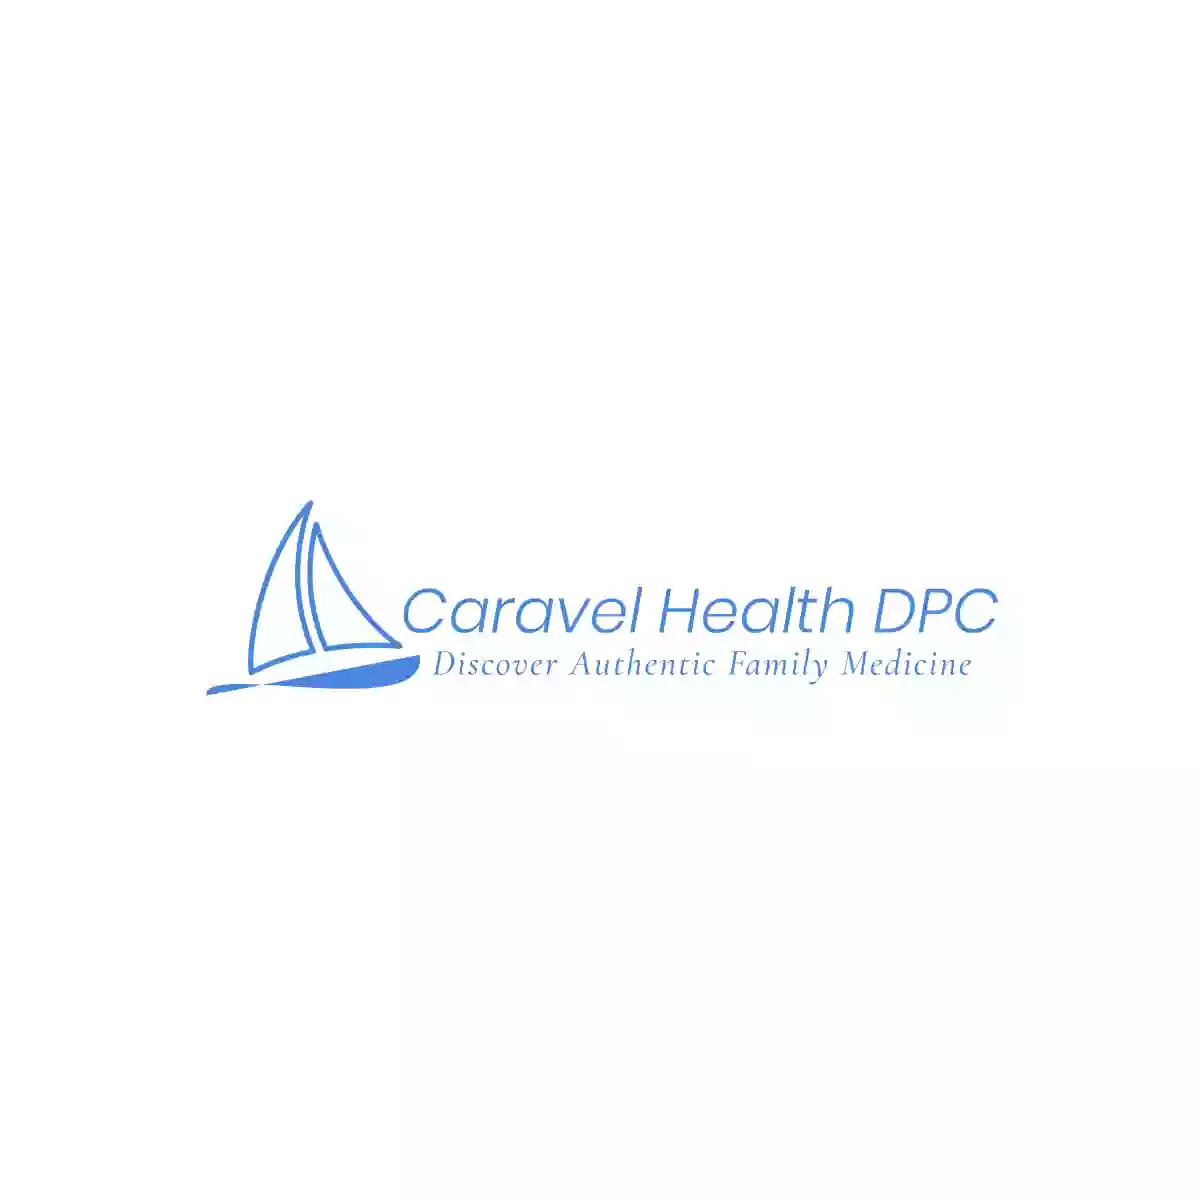 Caravel Health DPC